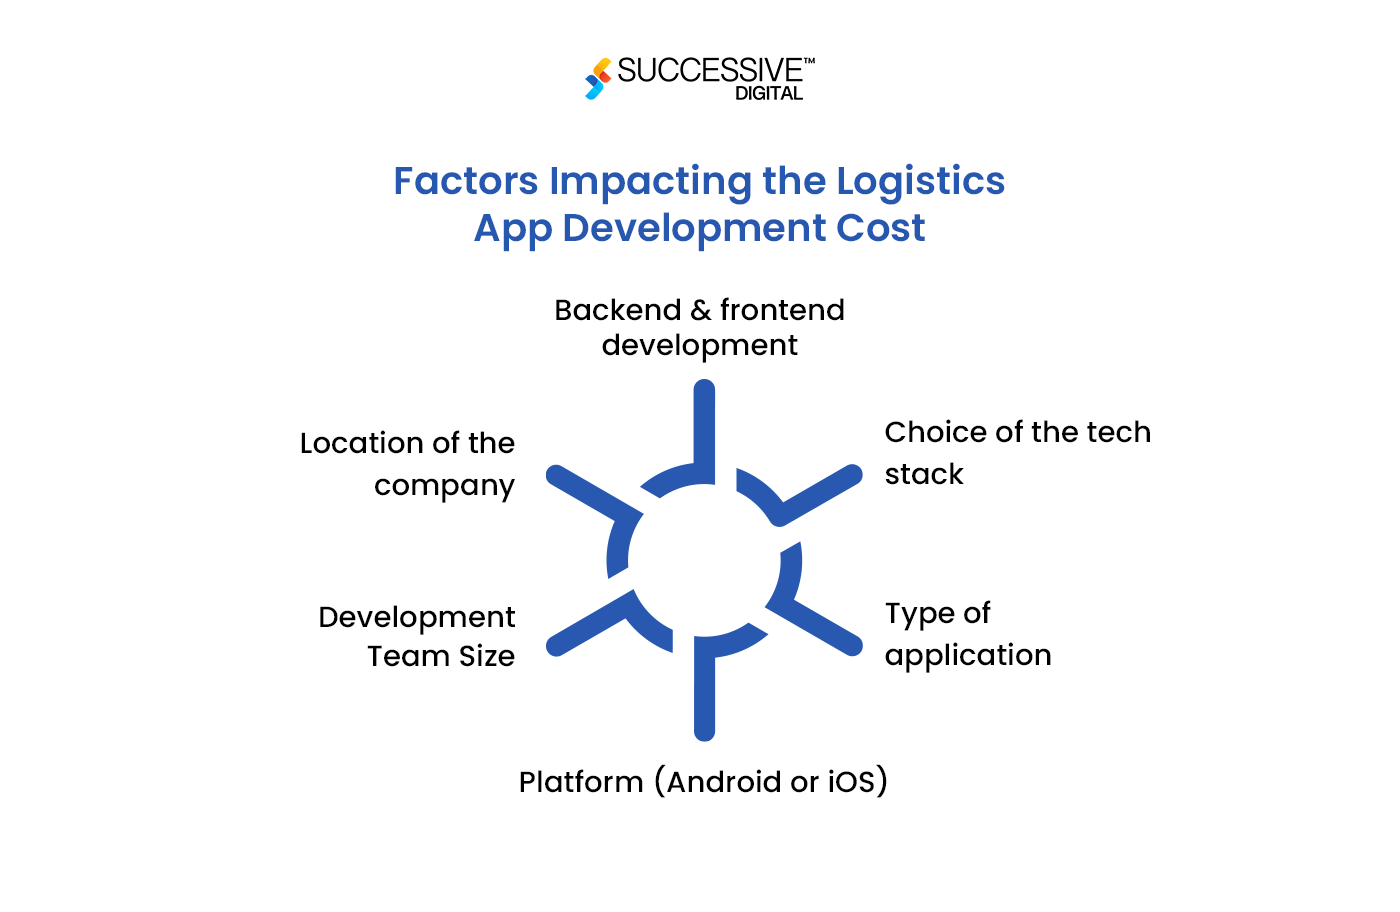 Factor that impacting logistics app development cost